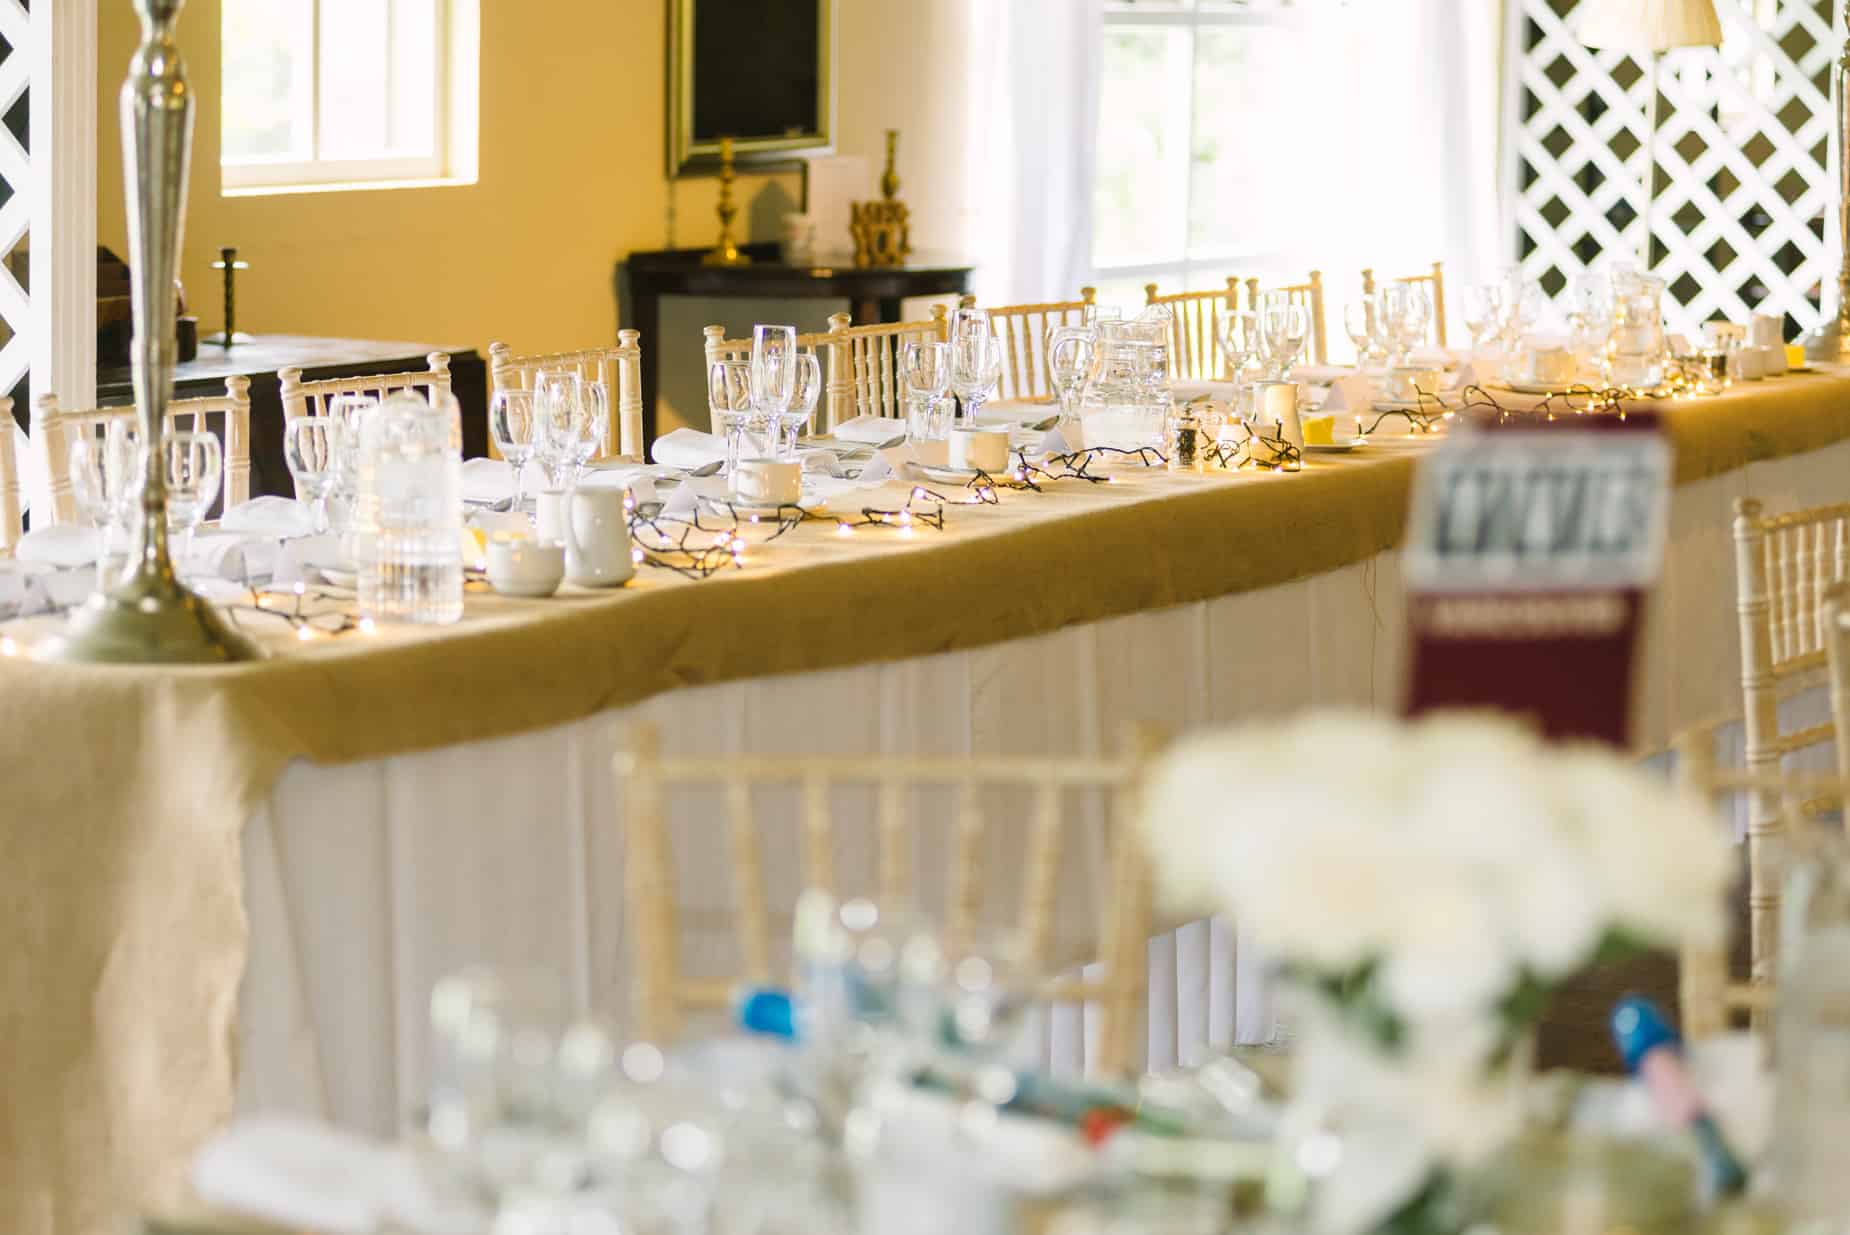 table setting at wedding breakfast